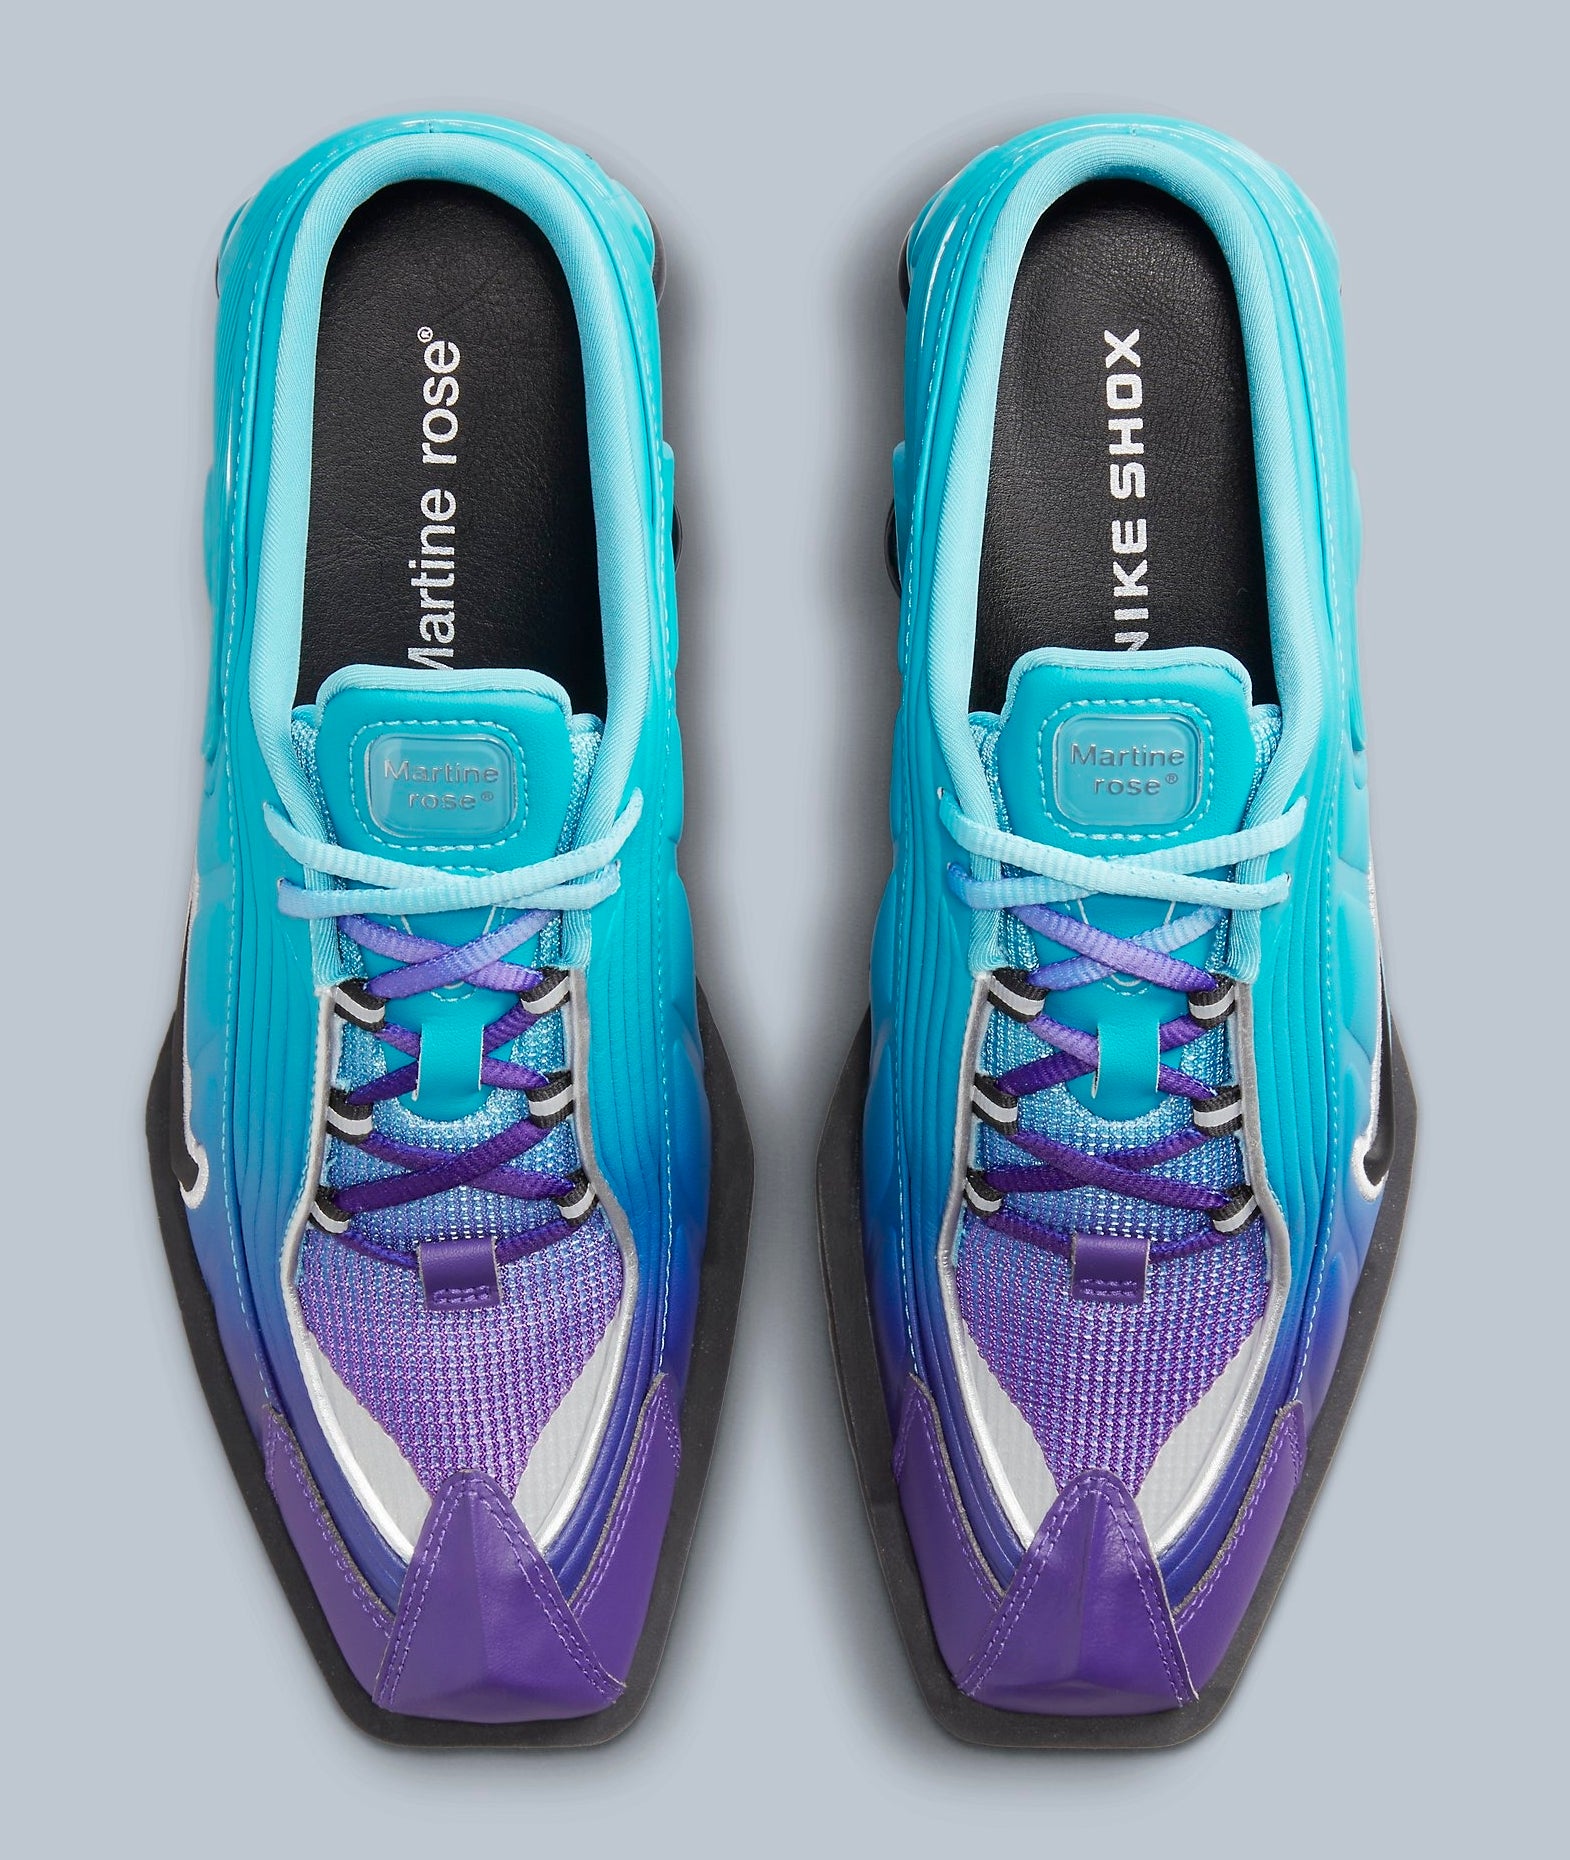 Martine Rose x Nike Shox MR4 Blue Colorway Info